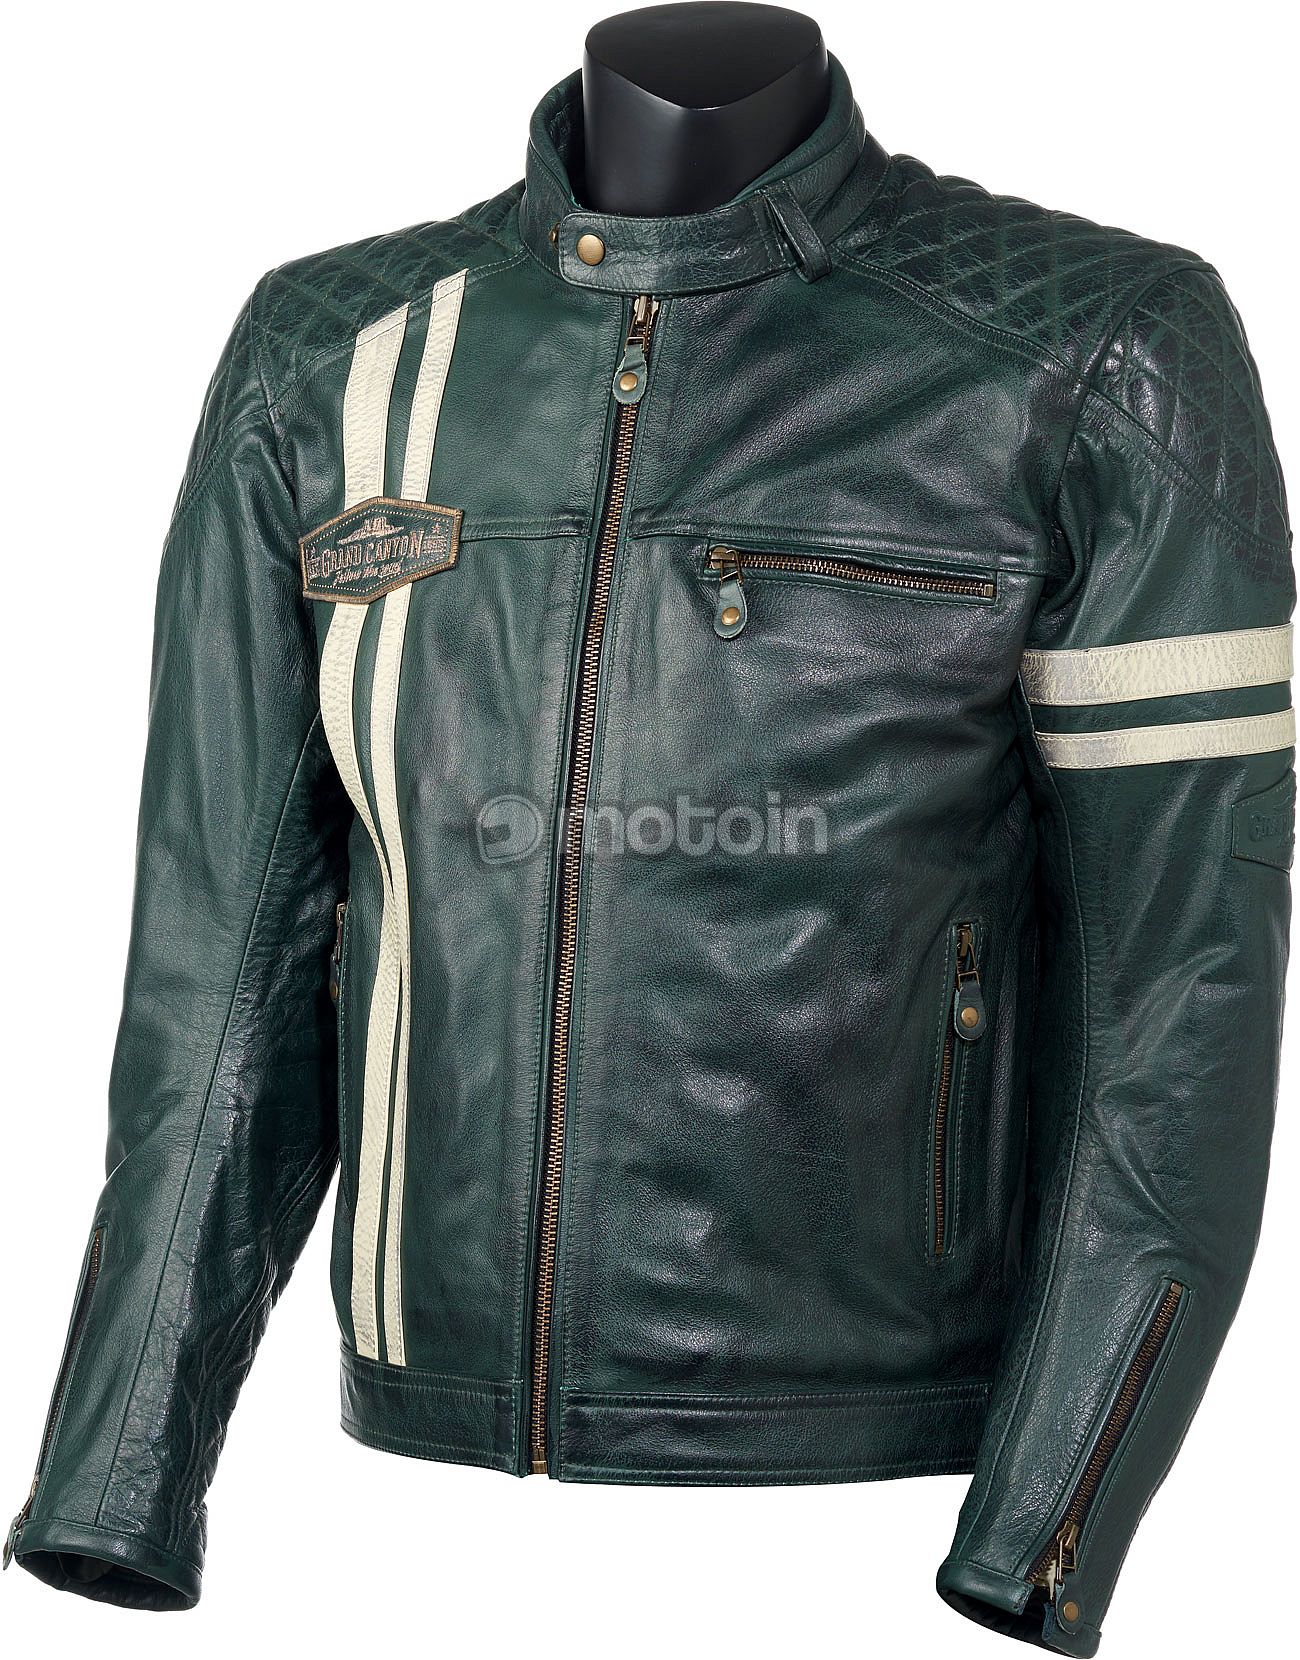 GC Bikewear Kirk, leather jacket